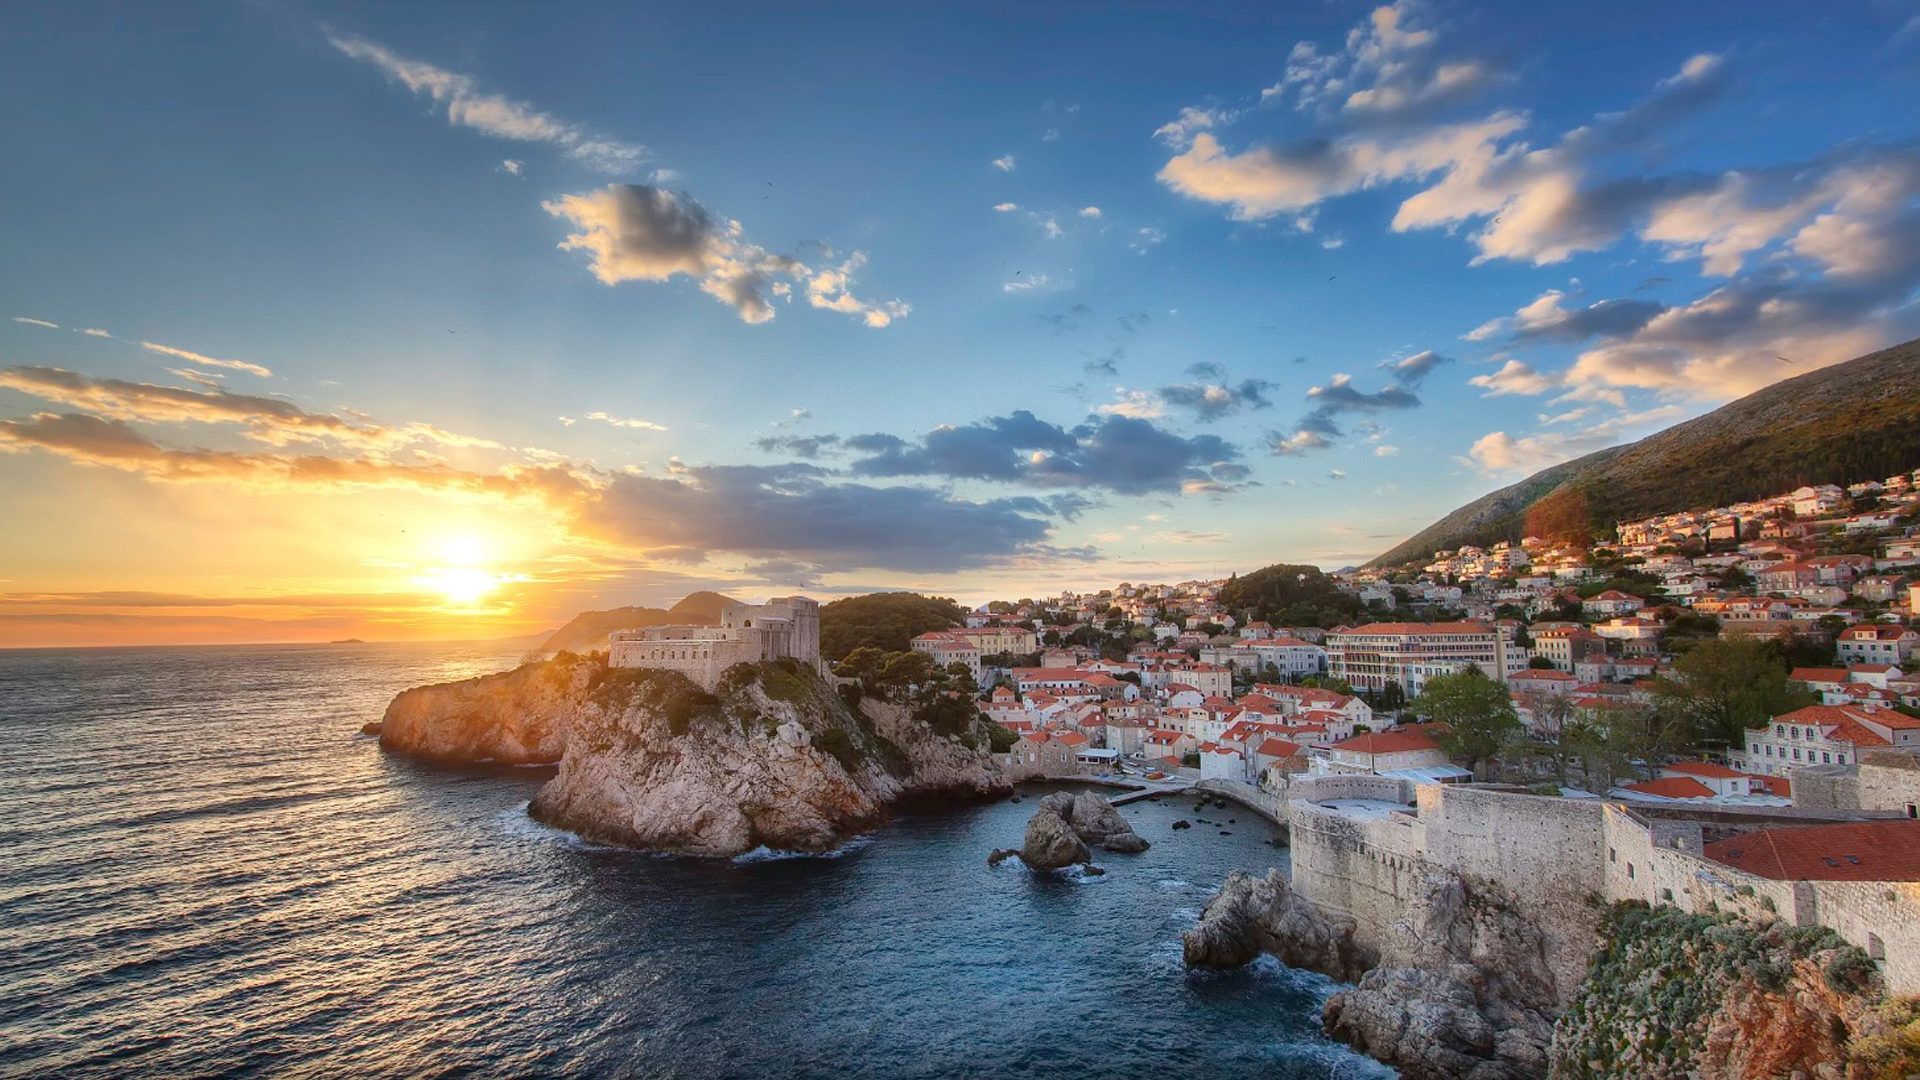 The Sunset View Over Dubrovnik Croatia Adriatic Sea Desktop Wallpaper HD For Mobile Phones And Laptops 1920x1200, Wallpaper13.com